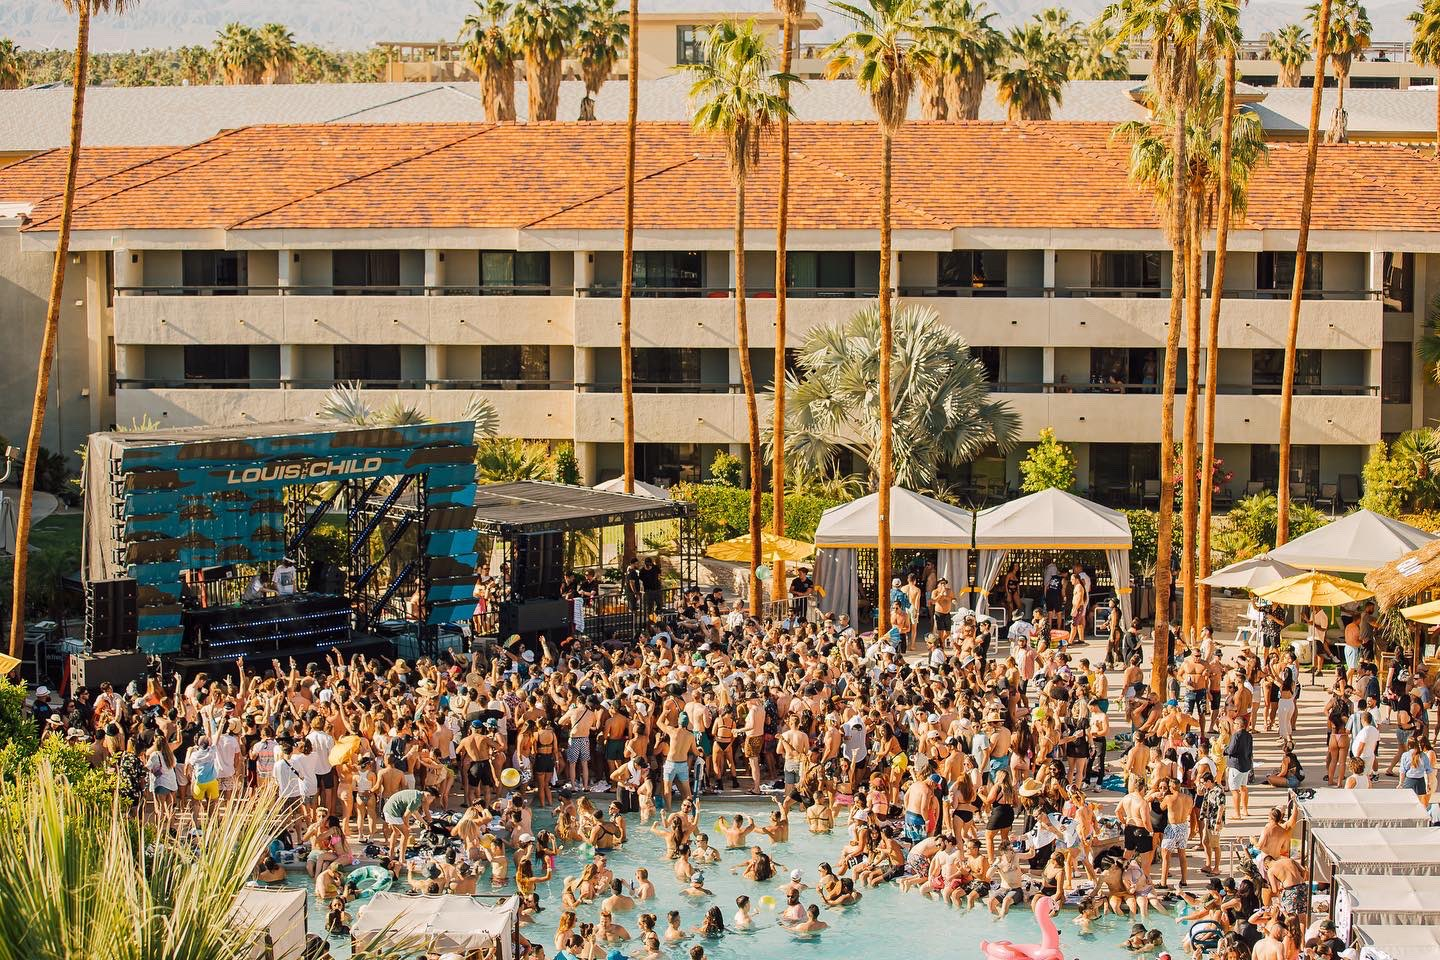 Day Club Palm Springs  Coachella Parties 2022 